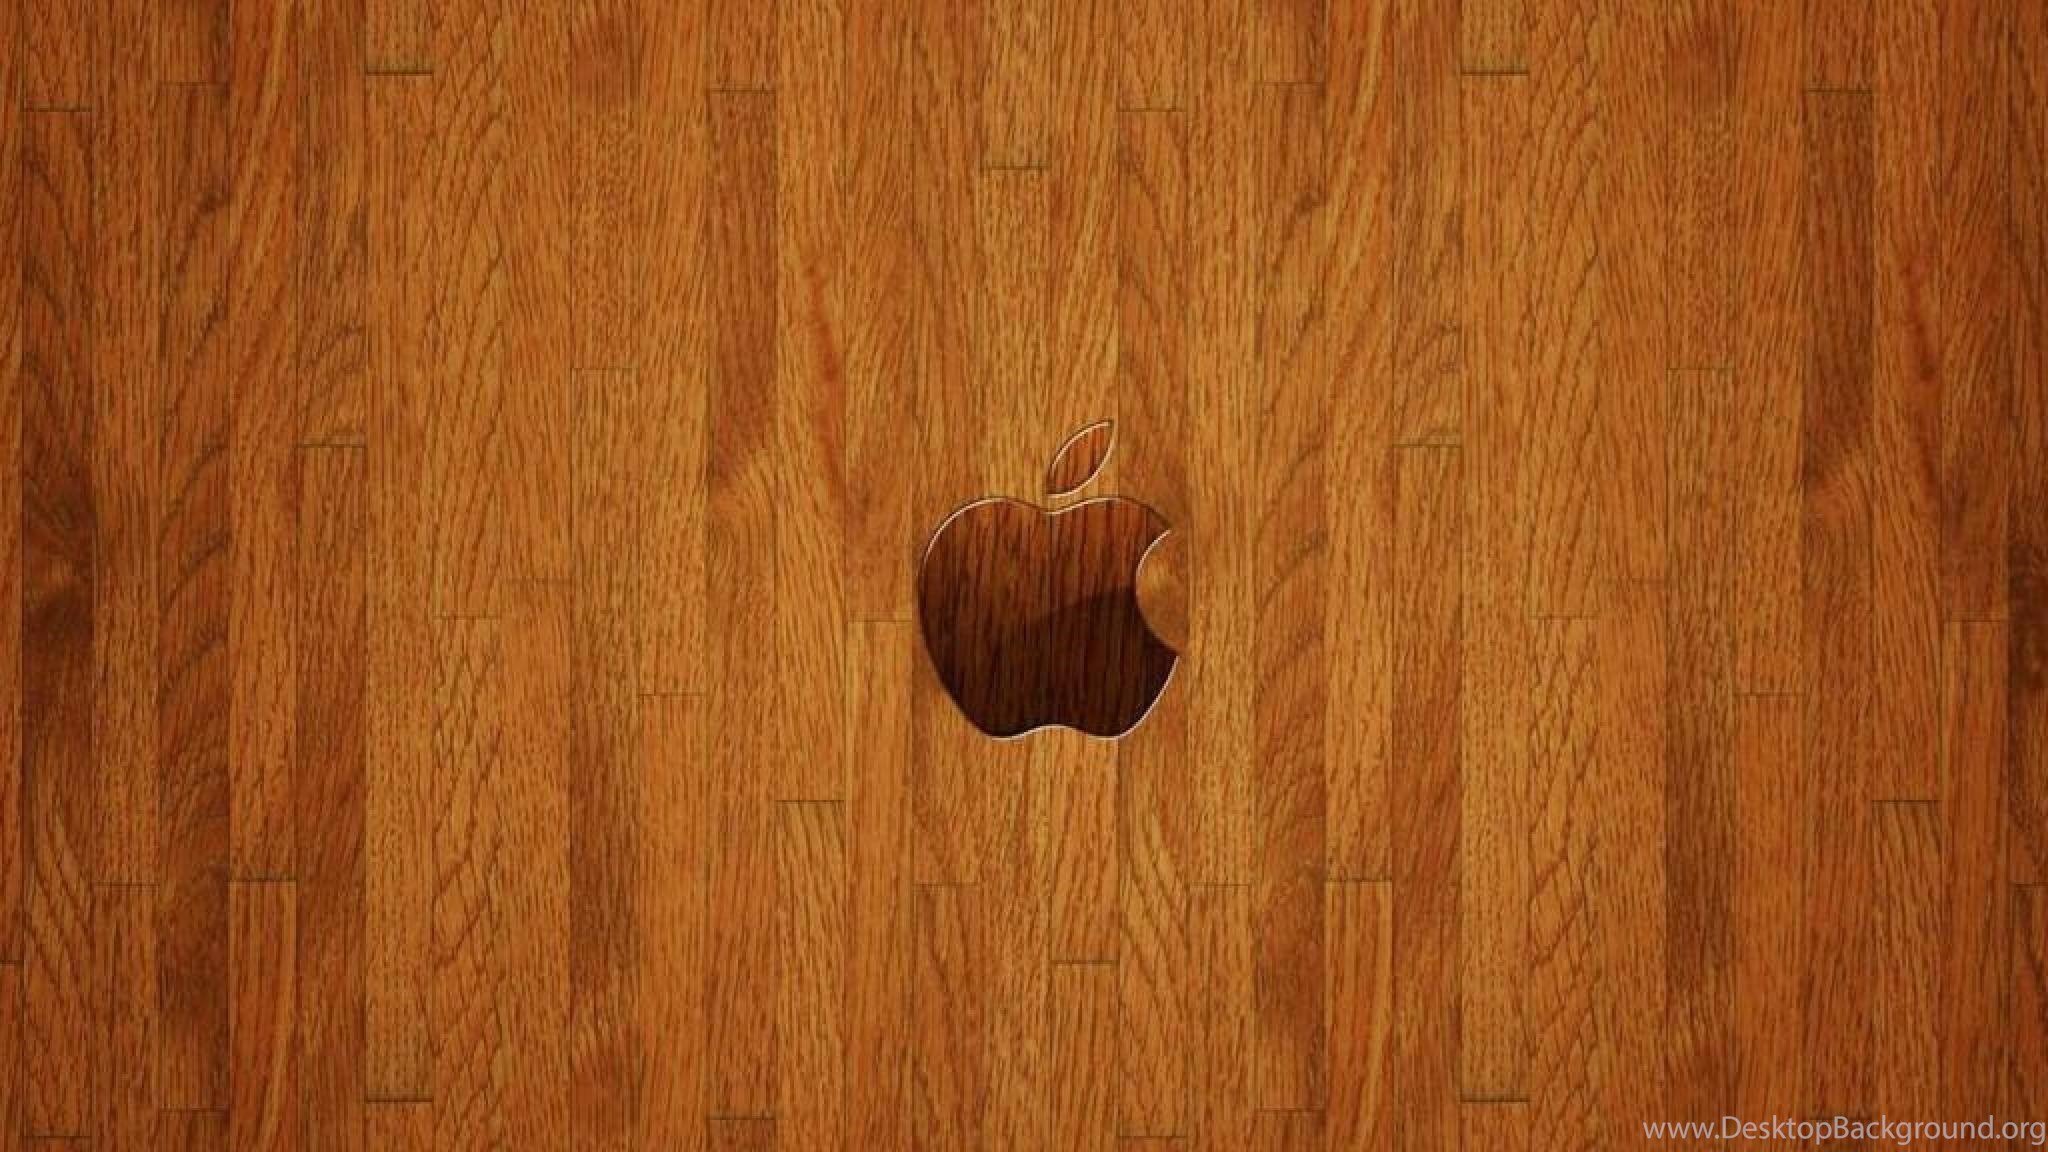 Computer Brand HD Apple Logo On Parquet Wood Floor Wallpaper Desktop Background